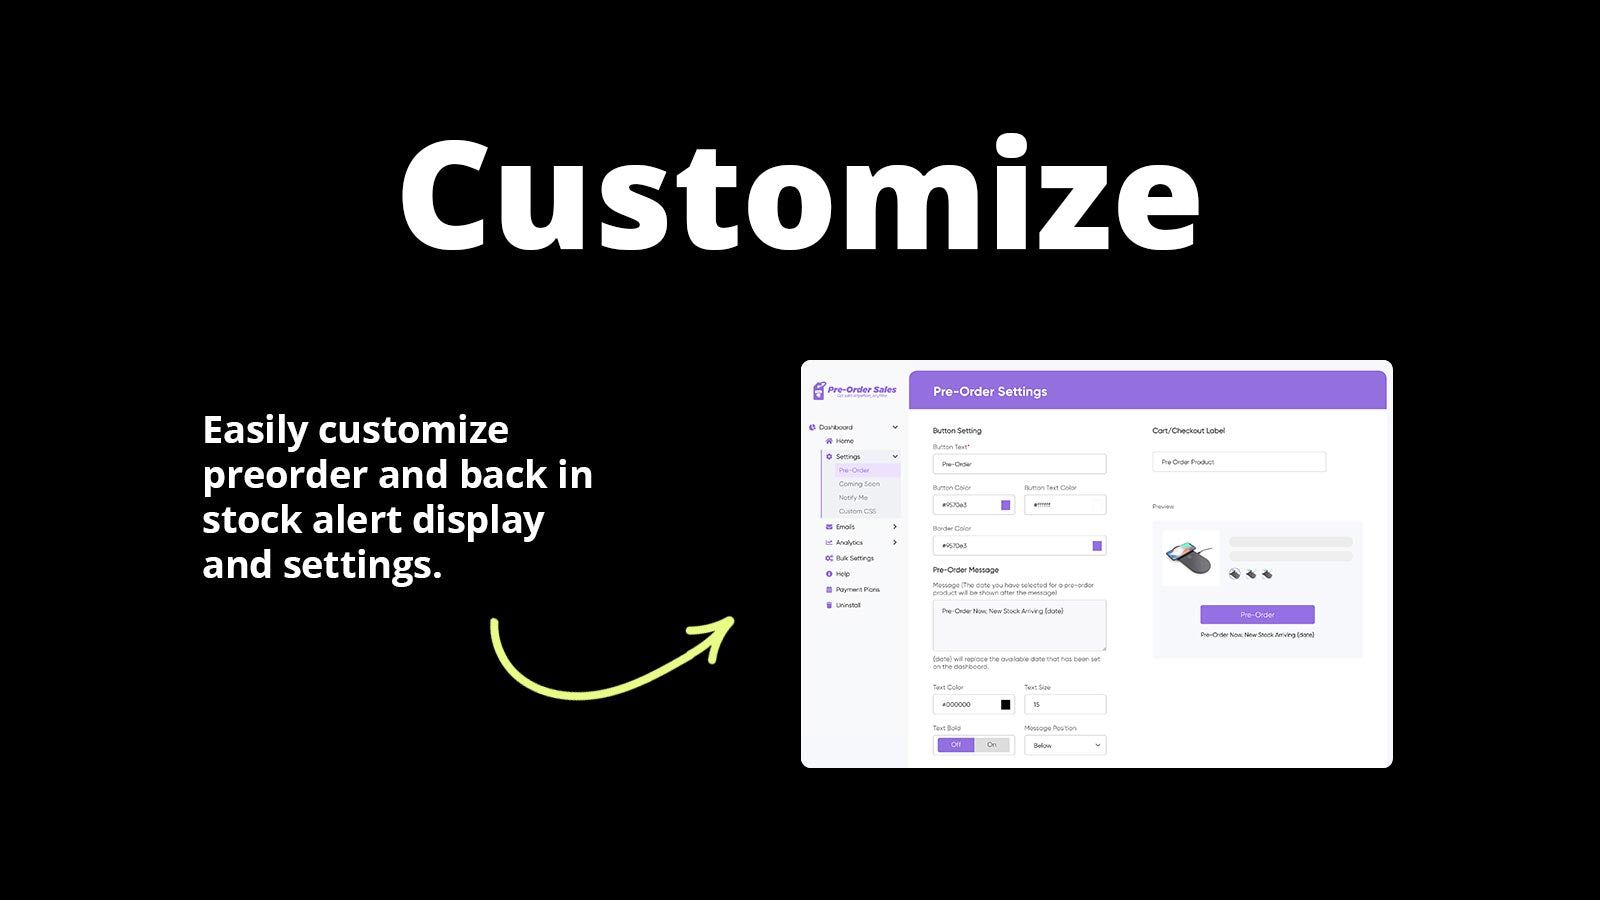 Customize - Easily customize display and settings